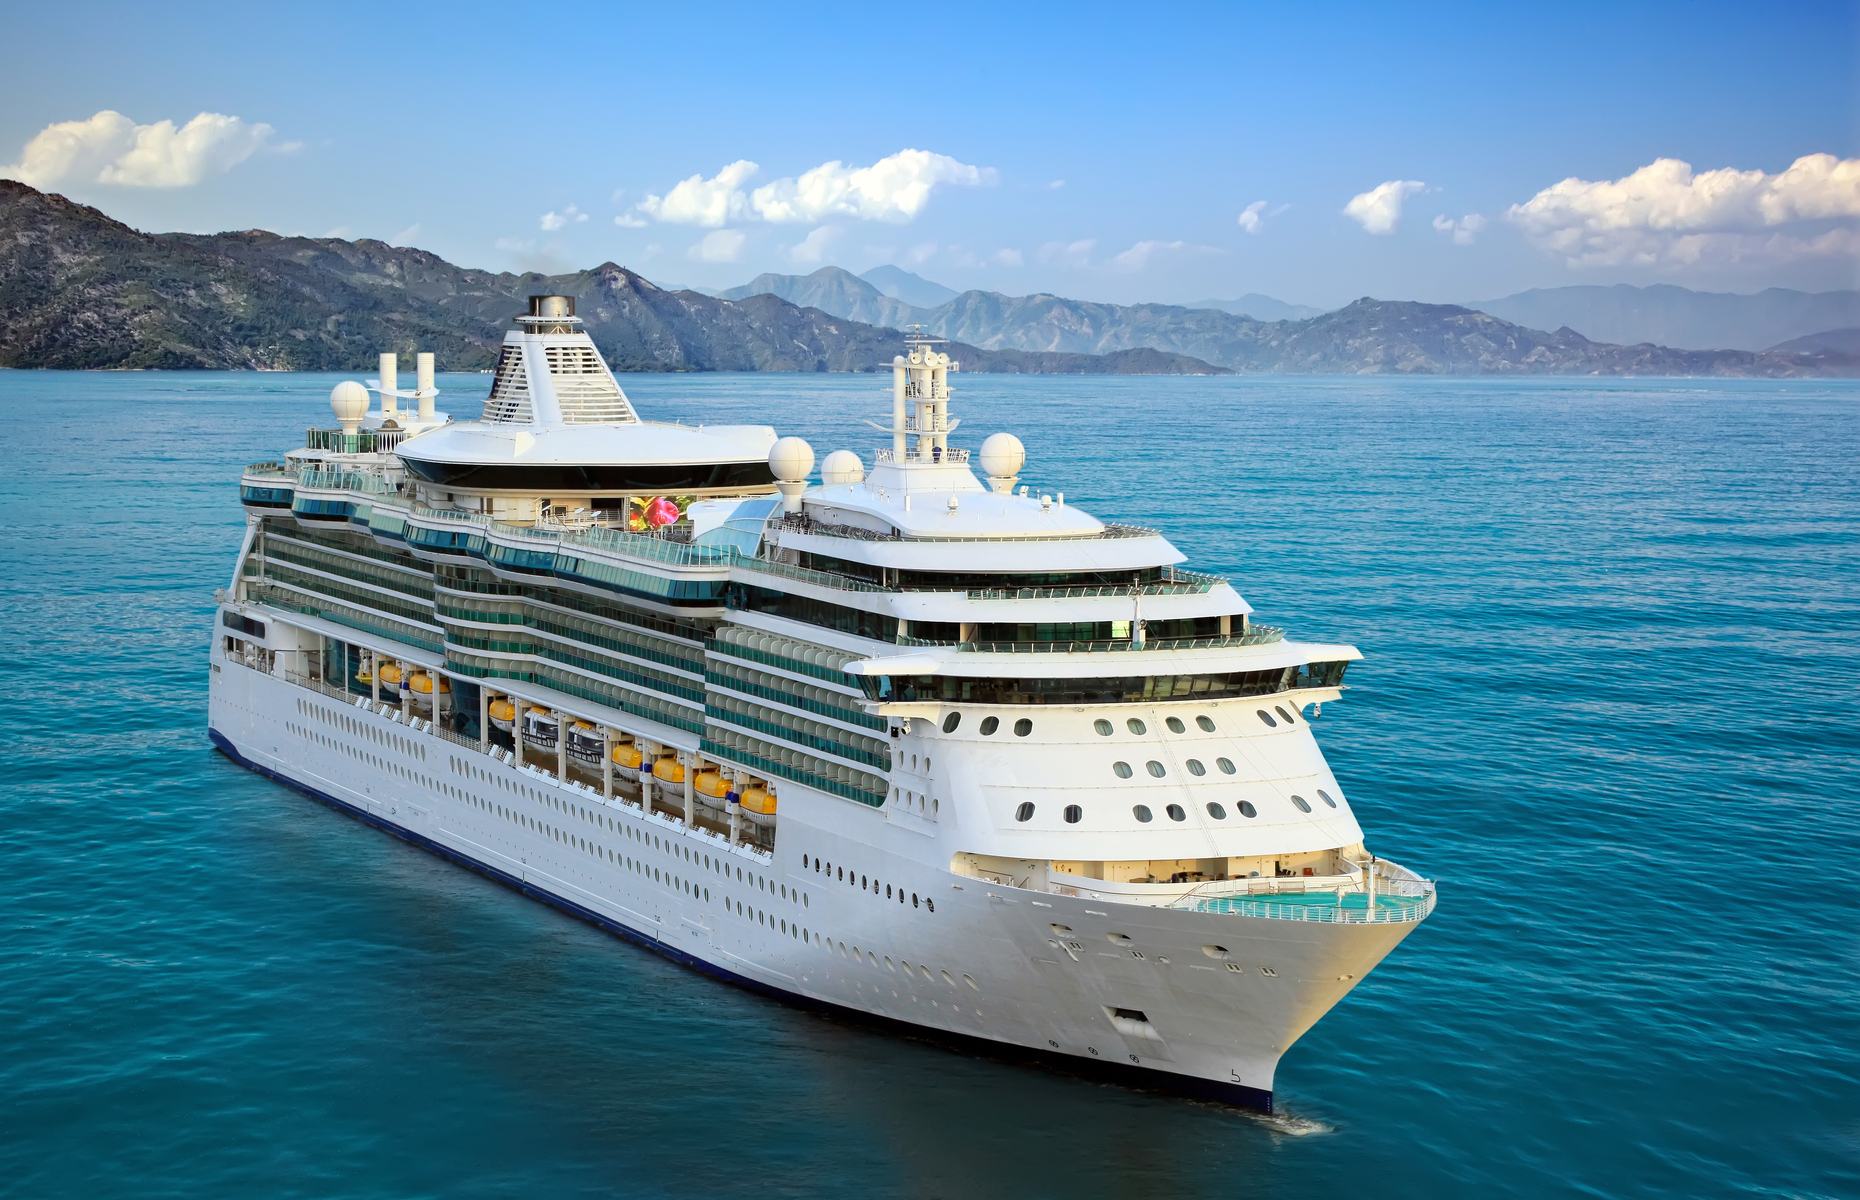 Cruise ship at sea (image: NAN728/Shutterstock)